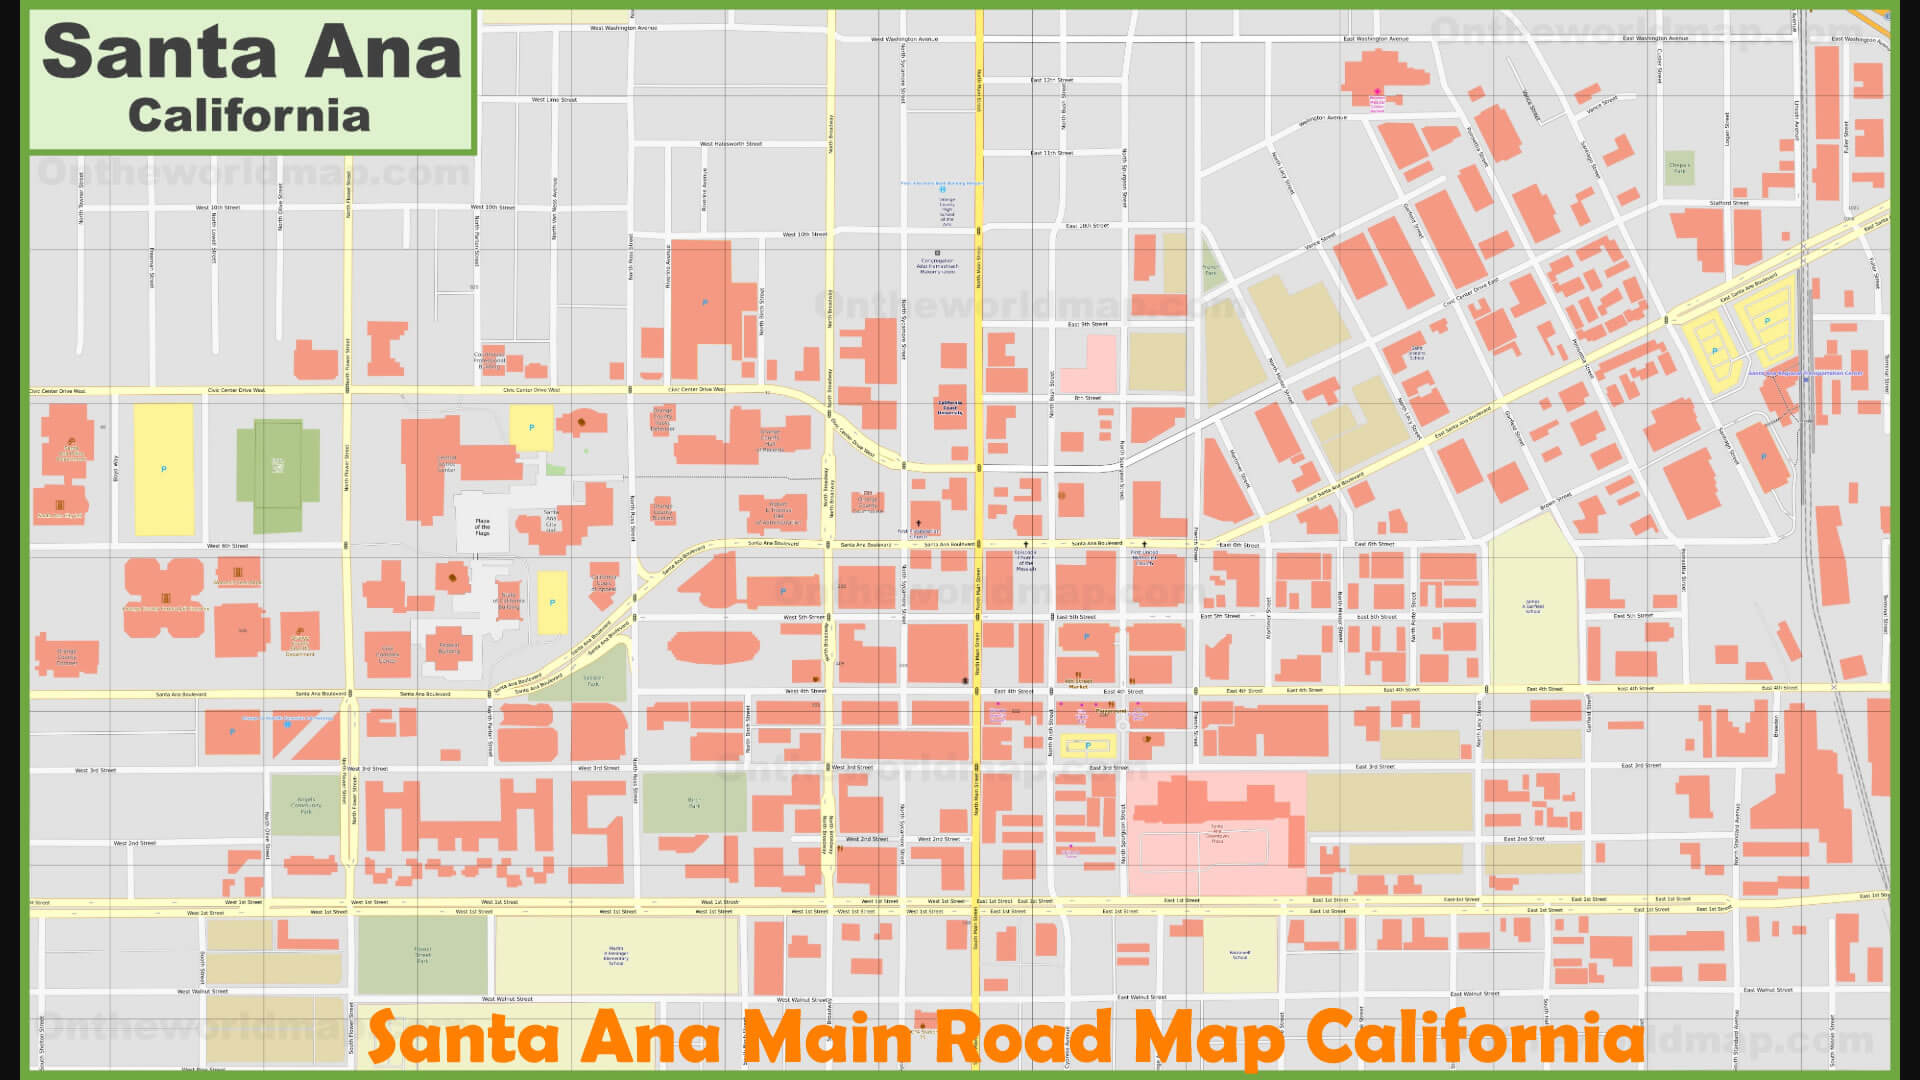 Santa Ana Main Road Map California